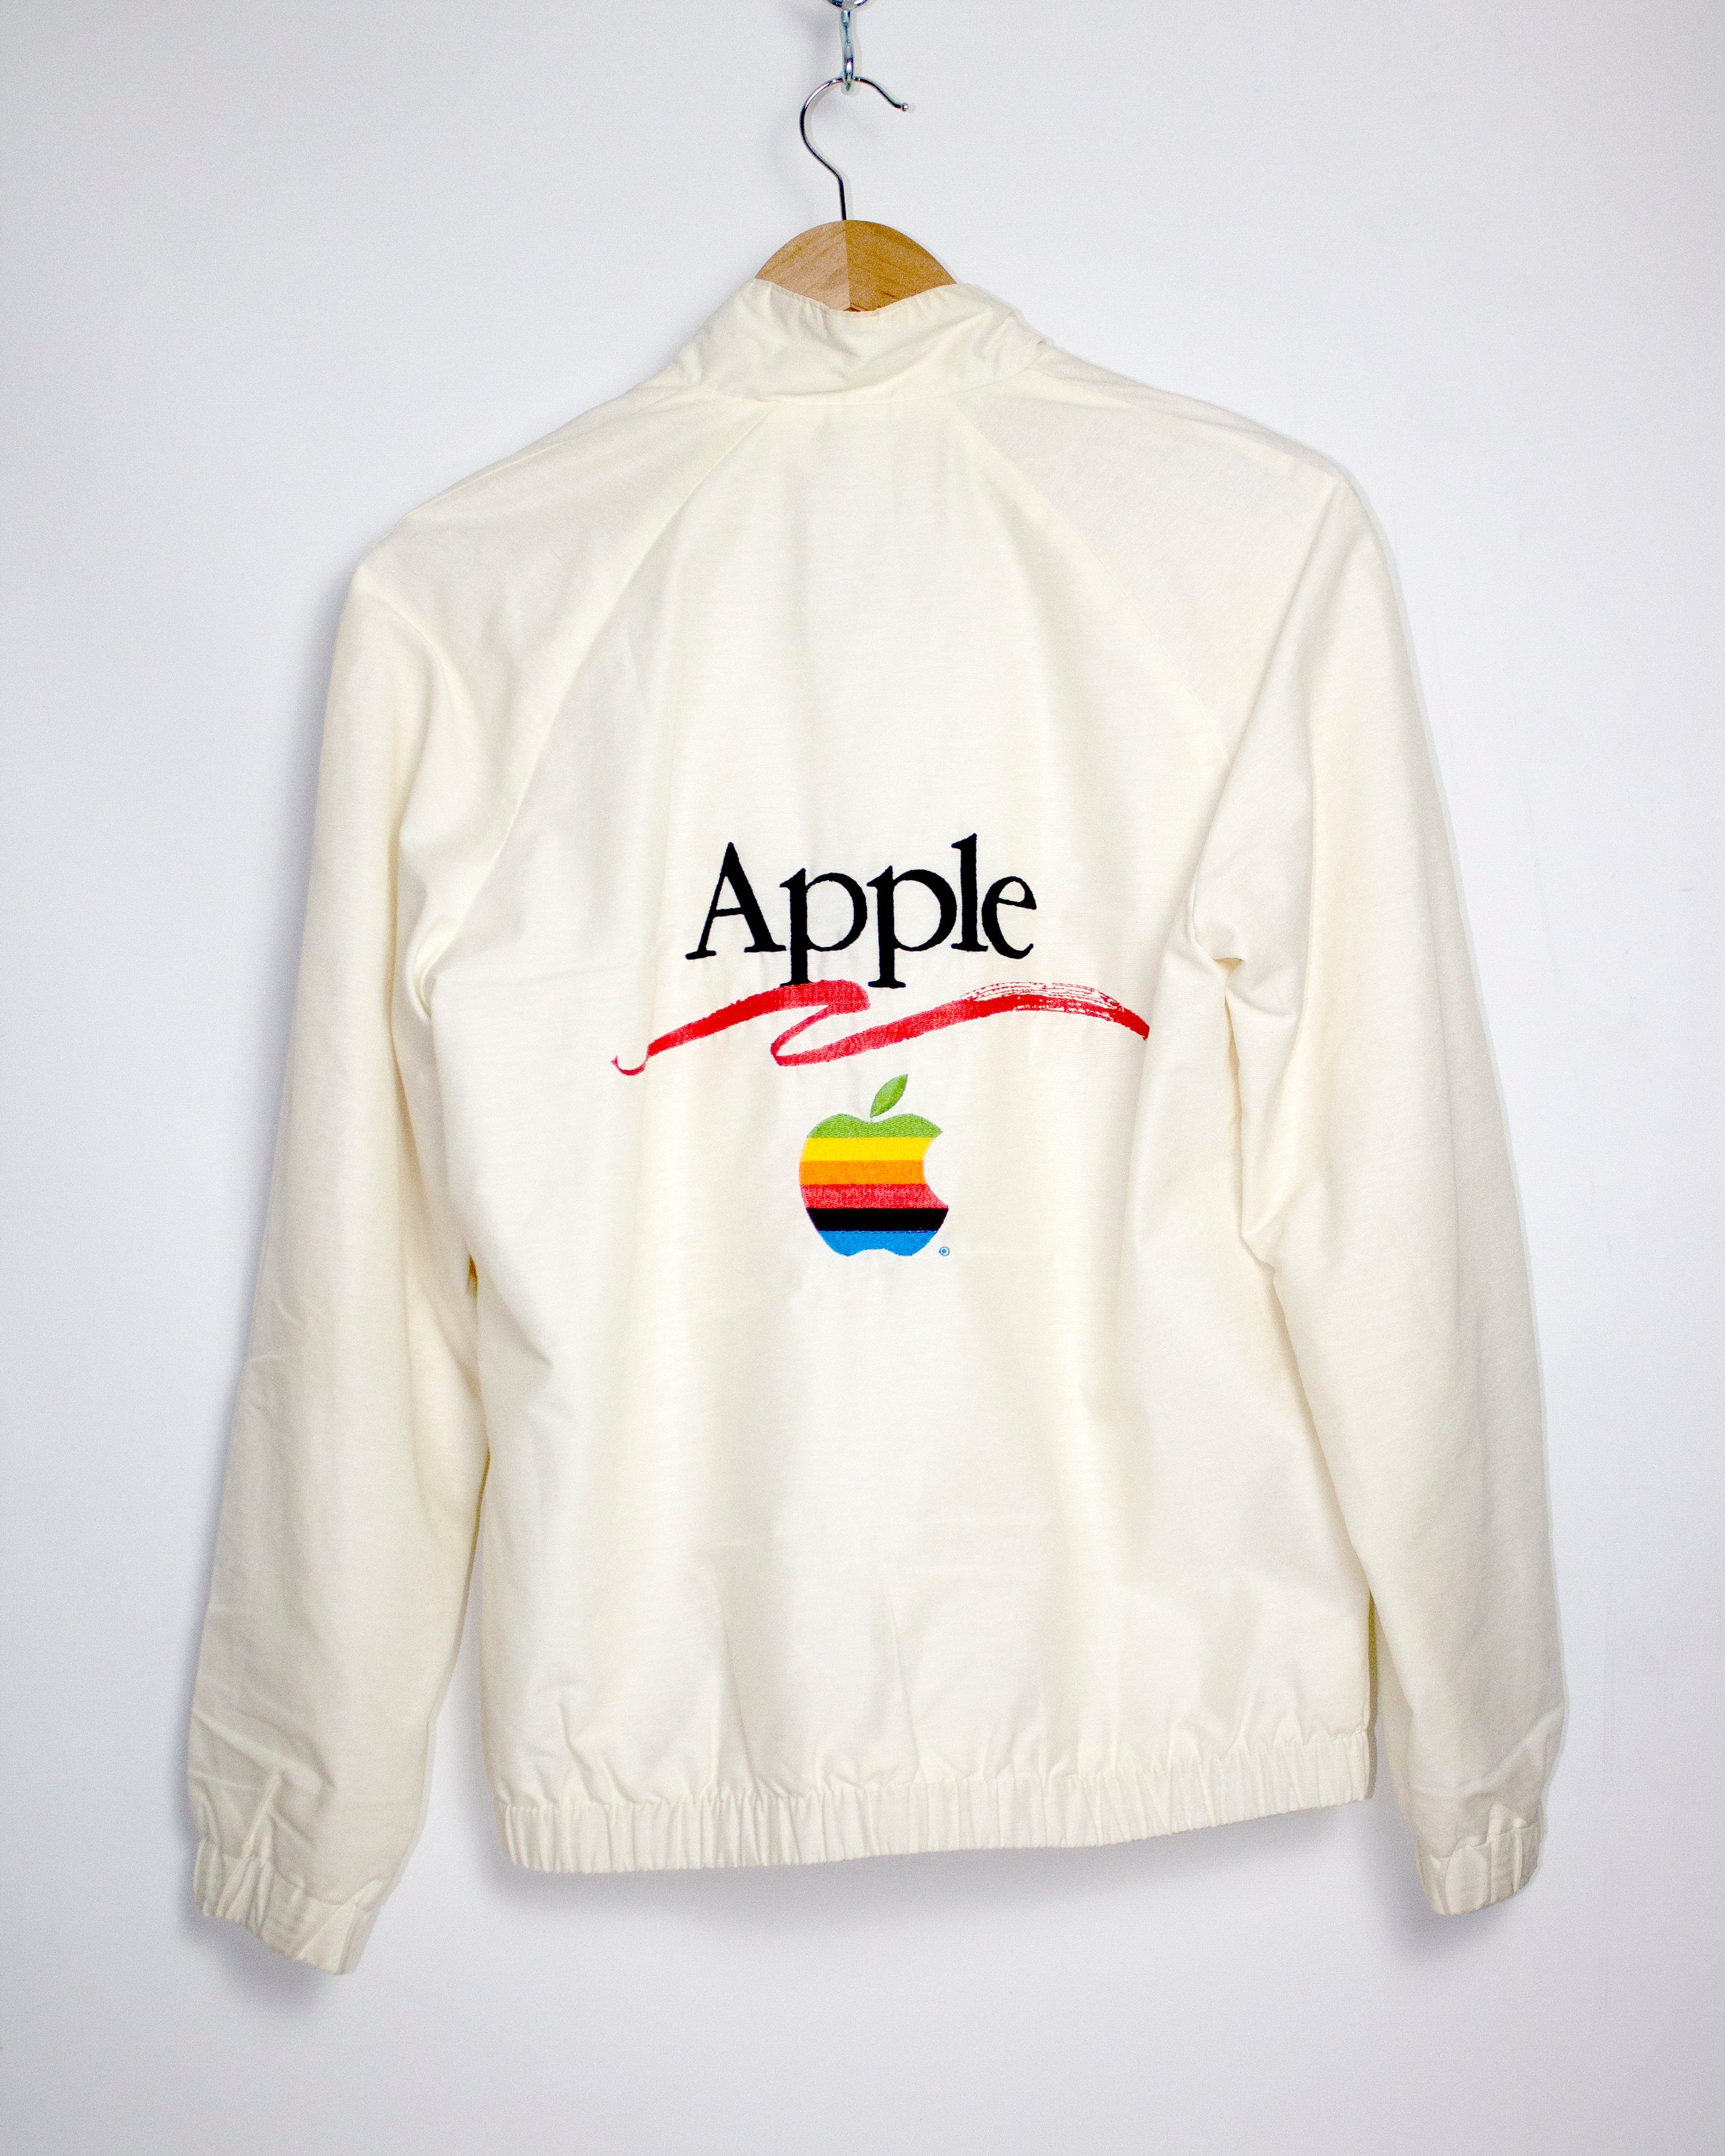 Vintage 1980's Apple Computer Jacket Sz S